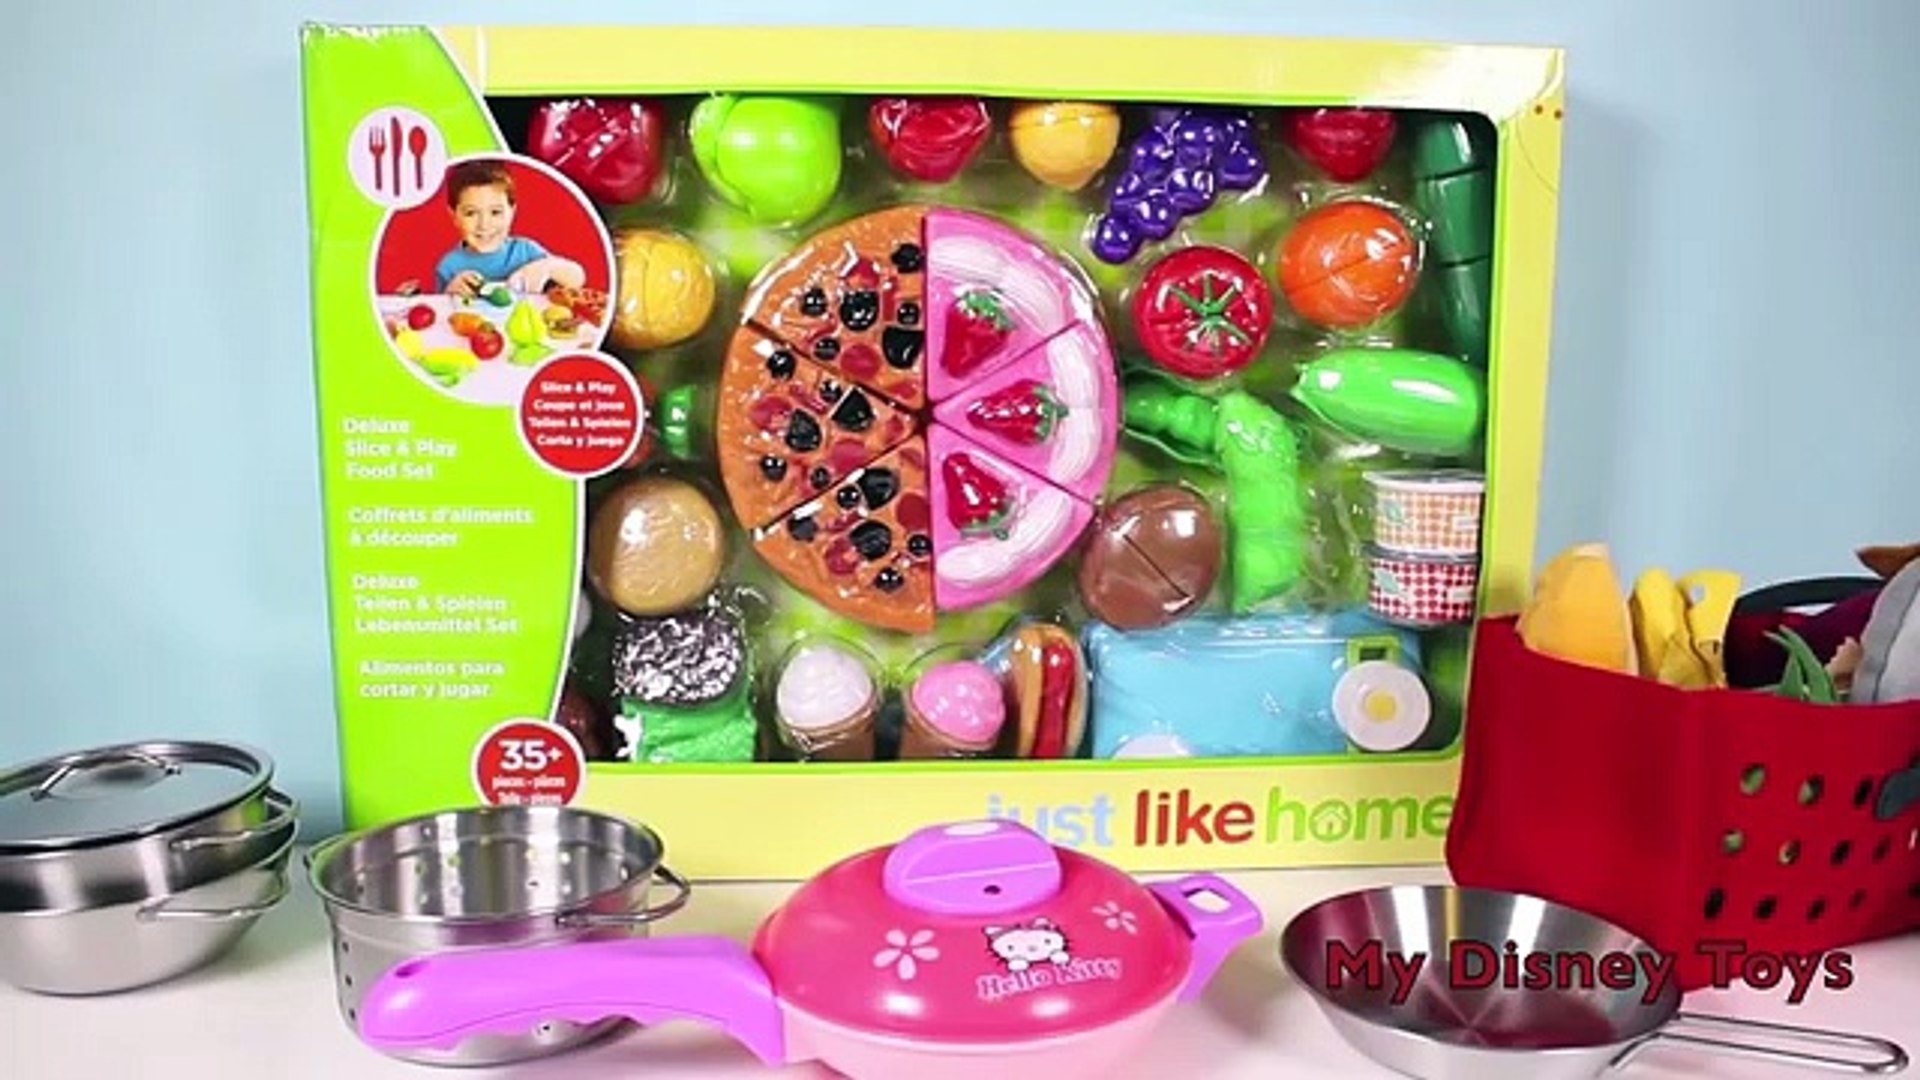 Toy Cutting fruit vegetables العاب طبخ حقيقية للاطفال تقطيع الخضروات  والفاكهة العاب بنات - video Dailymotion